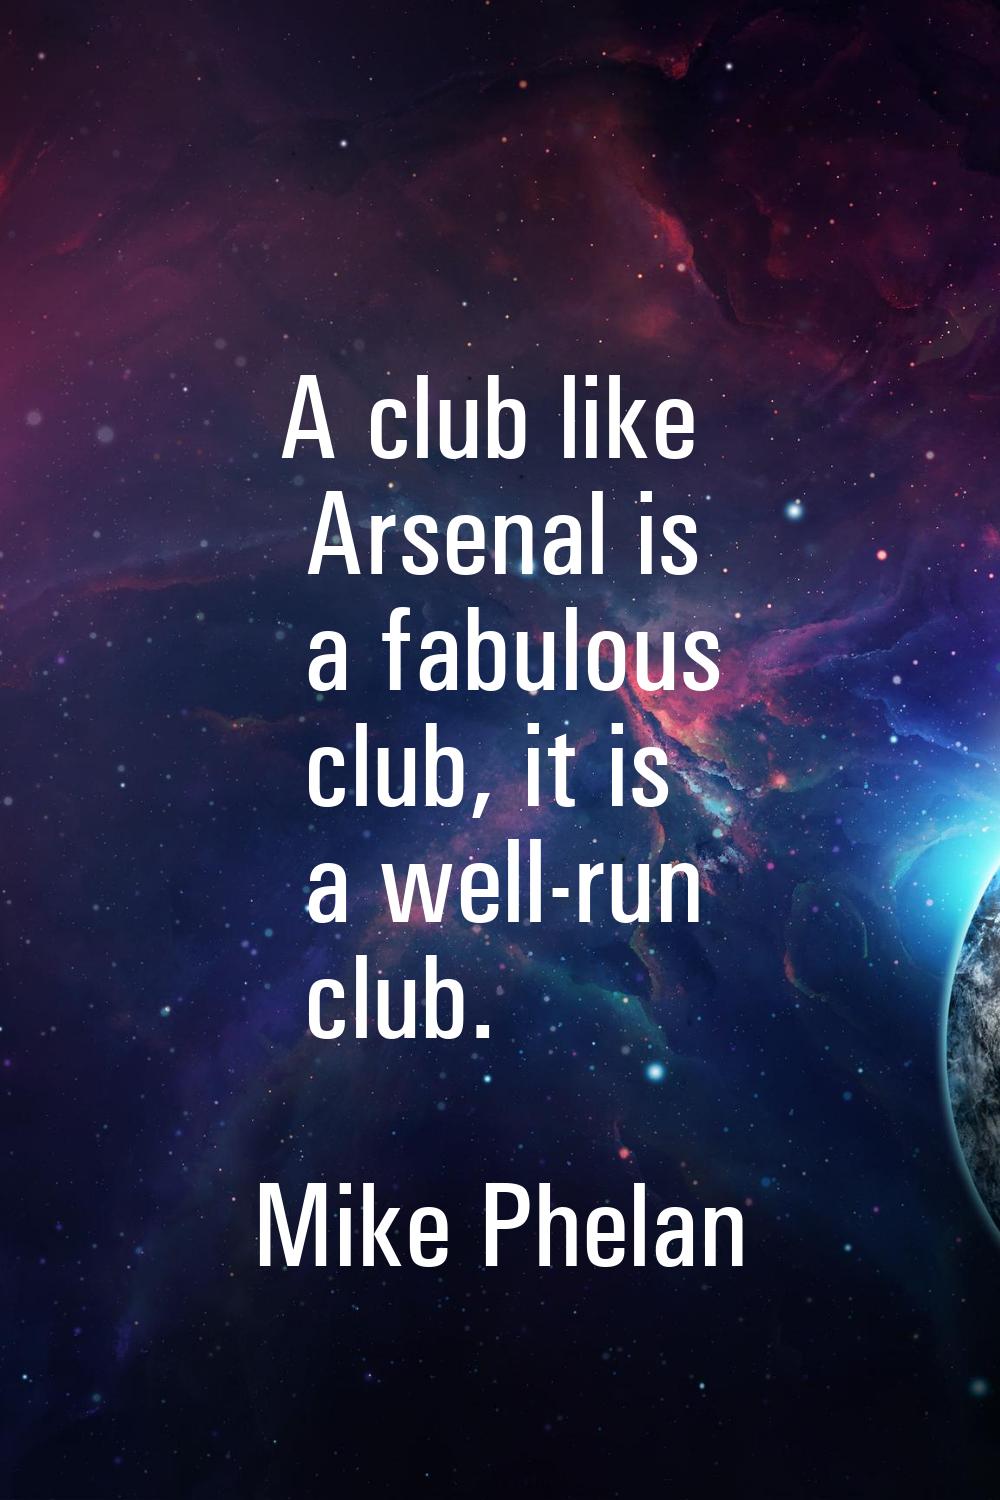 A club like Arsenal is a fabulous club, it is a well-run club.